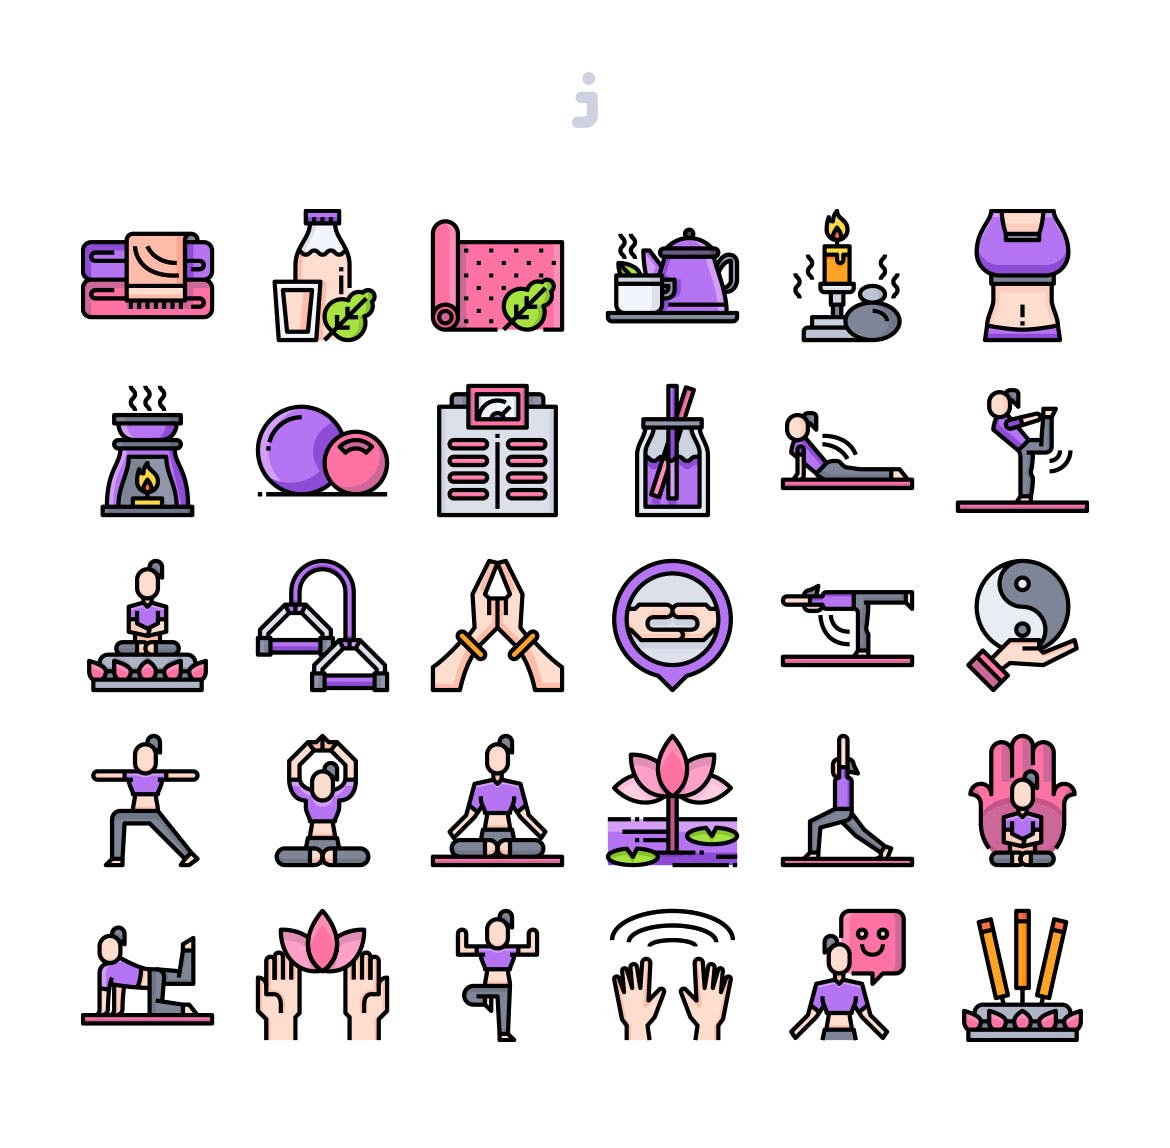 30枚瑜伽运动元素彩色矢量图标素材 30 Yoga Element Icons插图(1)